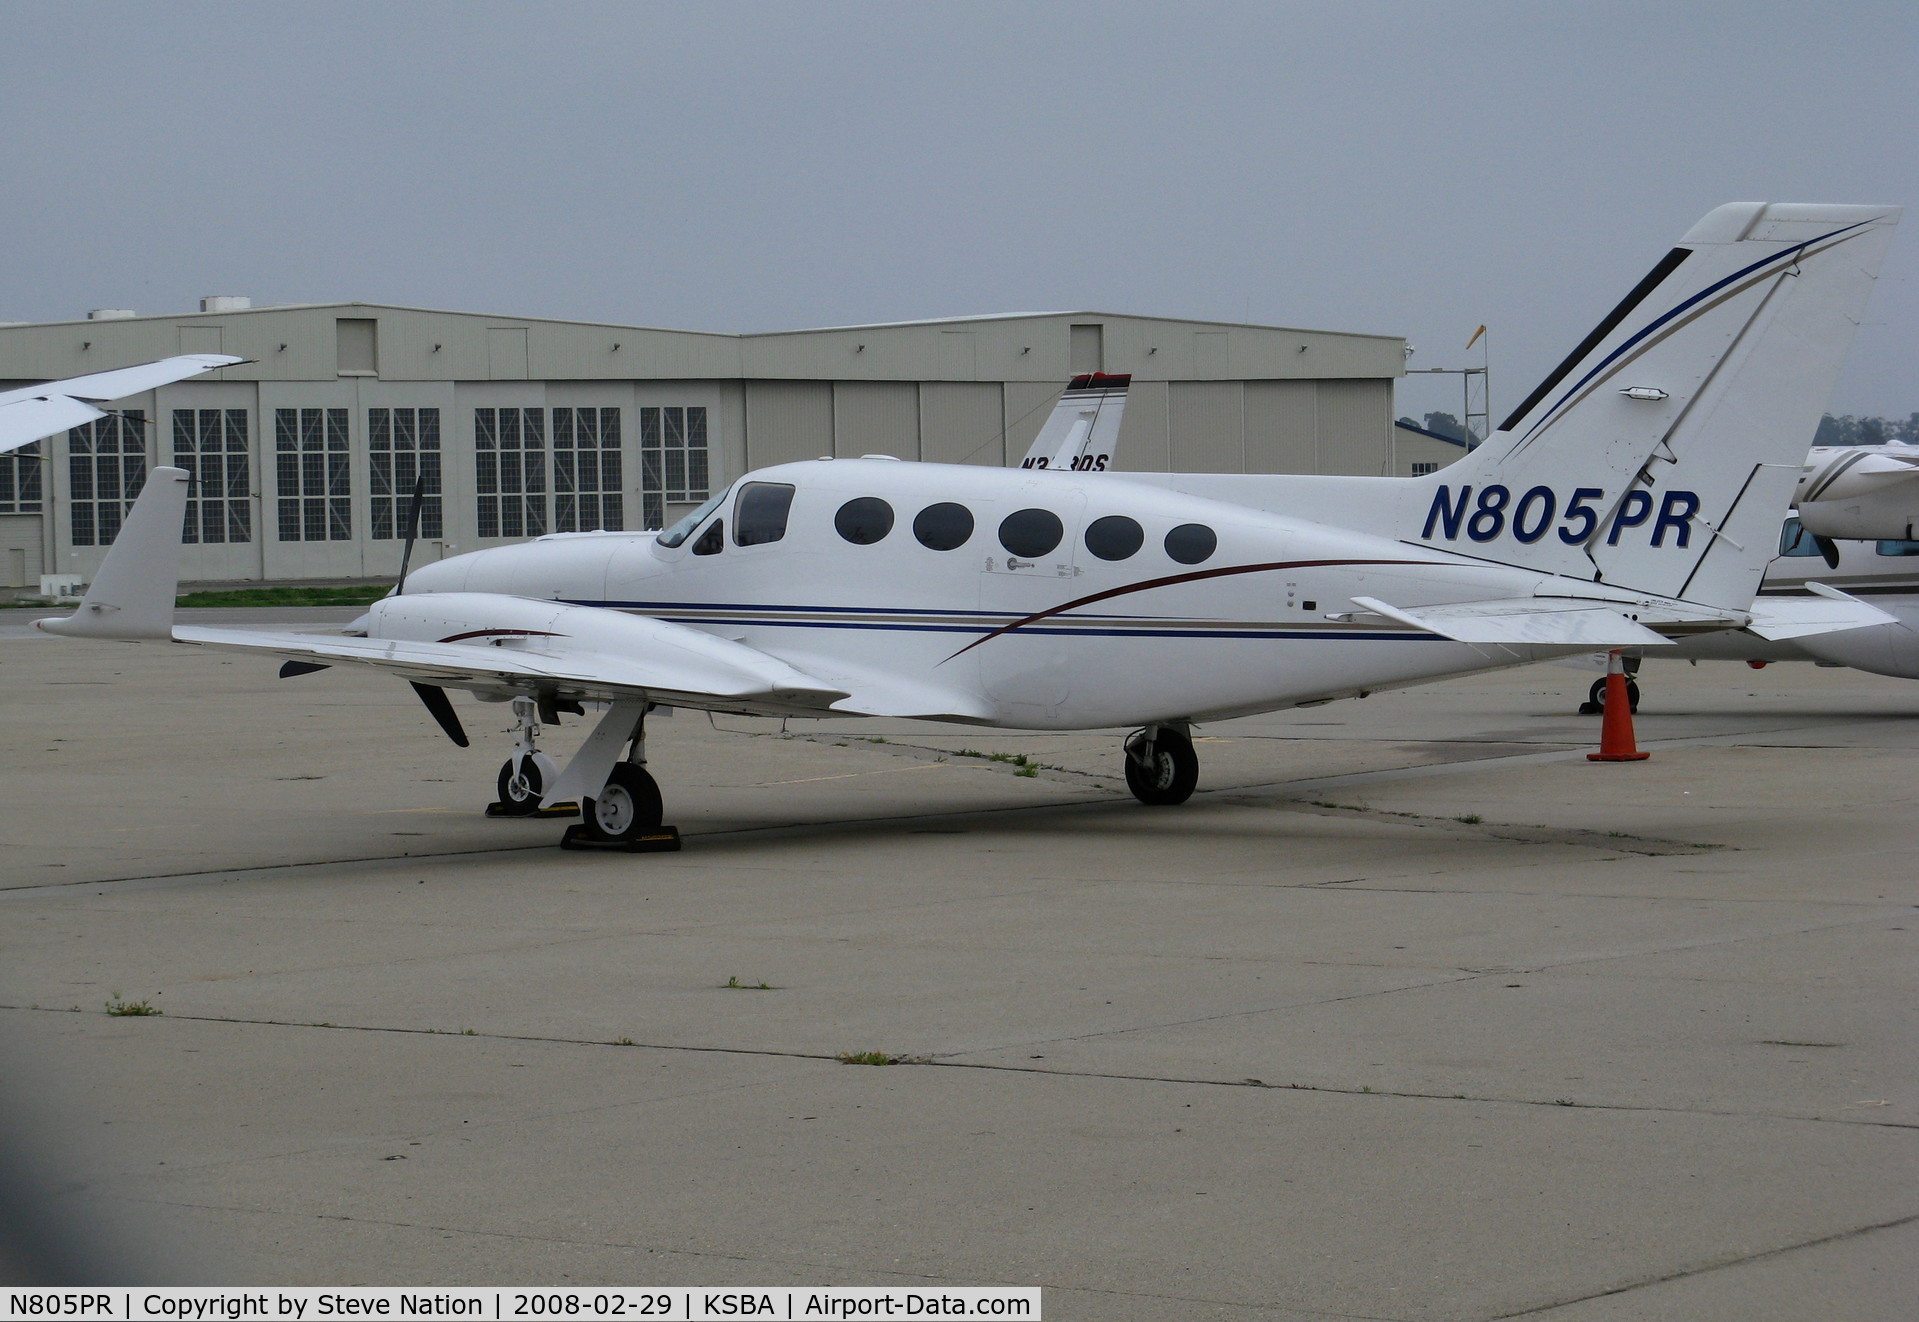 N805PR, 1985 Cessna 414A Chancellor C/N 414A1206, 1985 Cessna 414A with winglets @ Santa Barbara Municipal Airport, CA